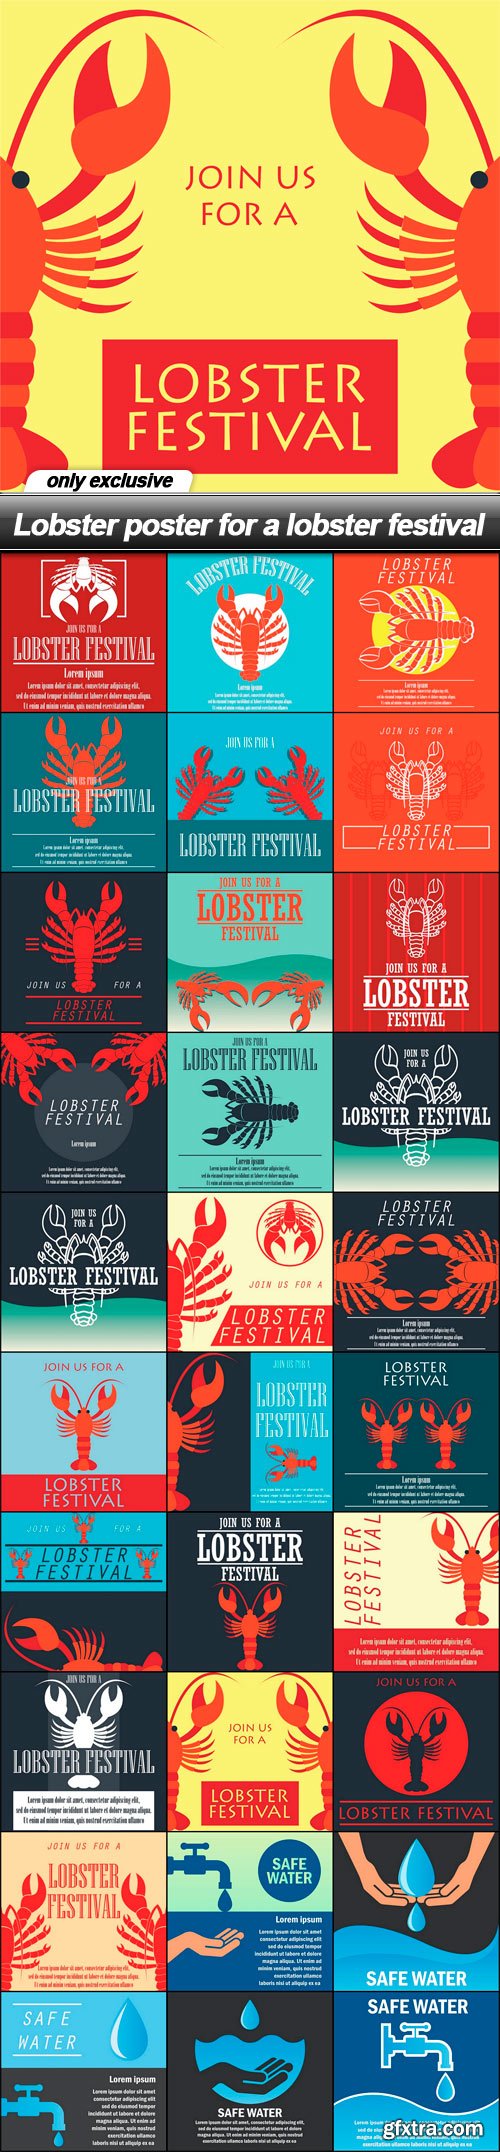 Lobster poster for a lobster festival - 30 EPS